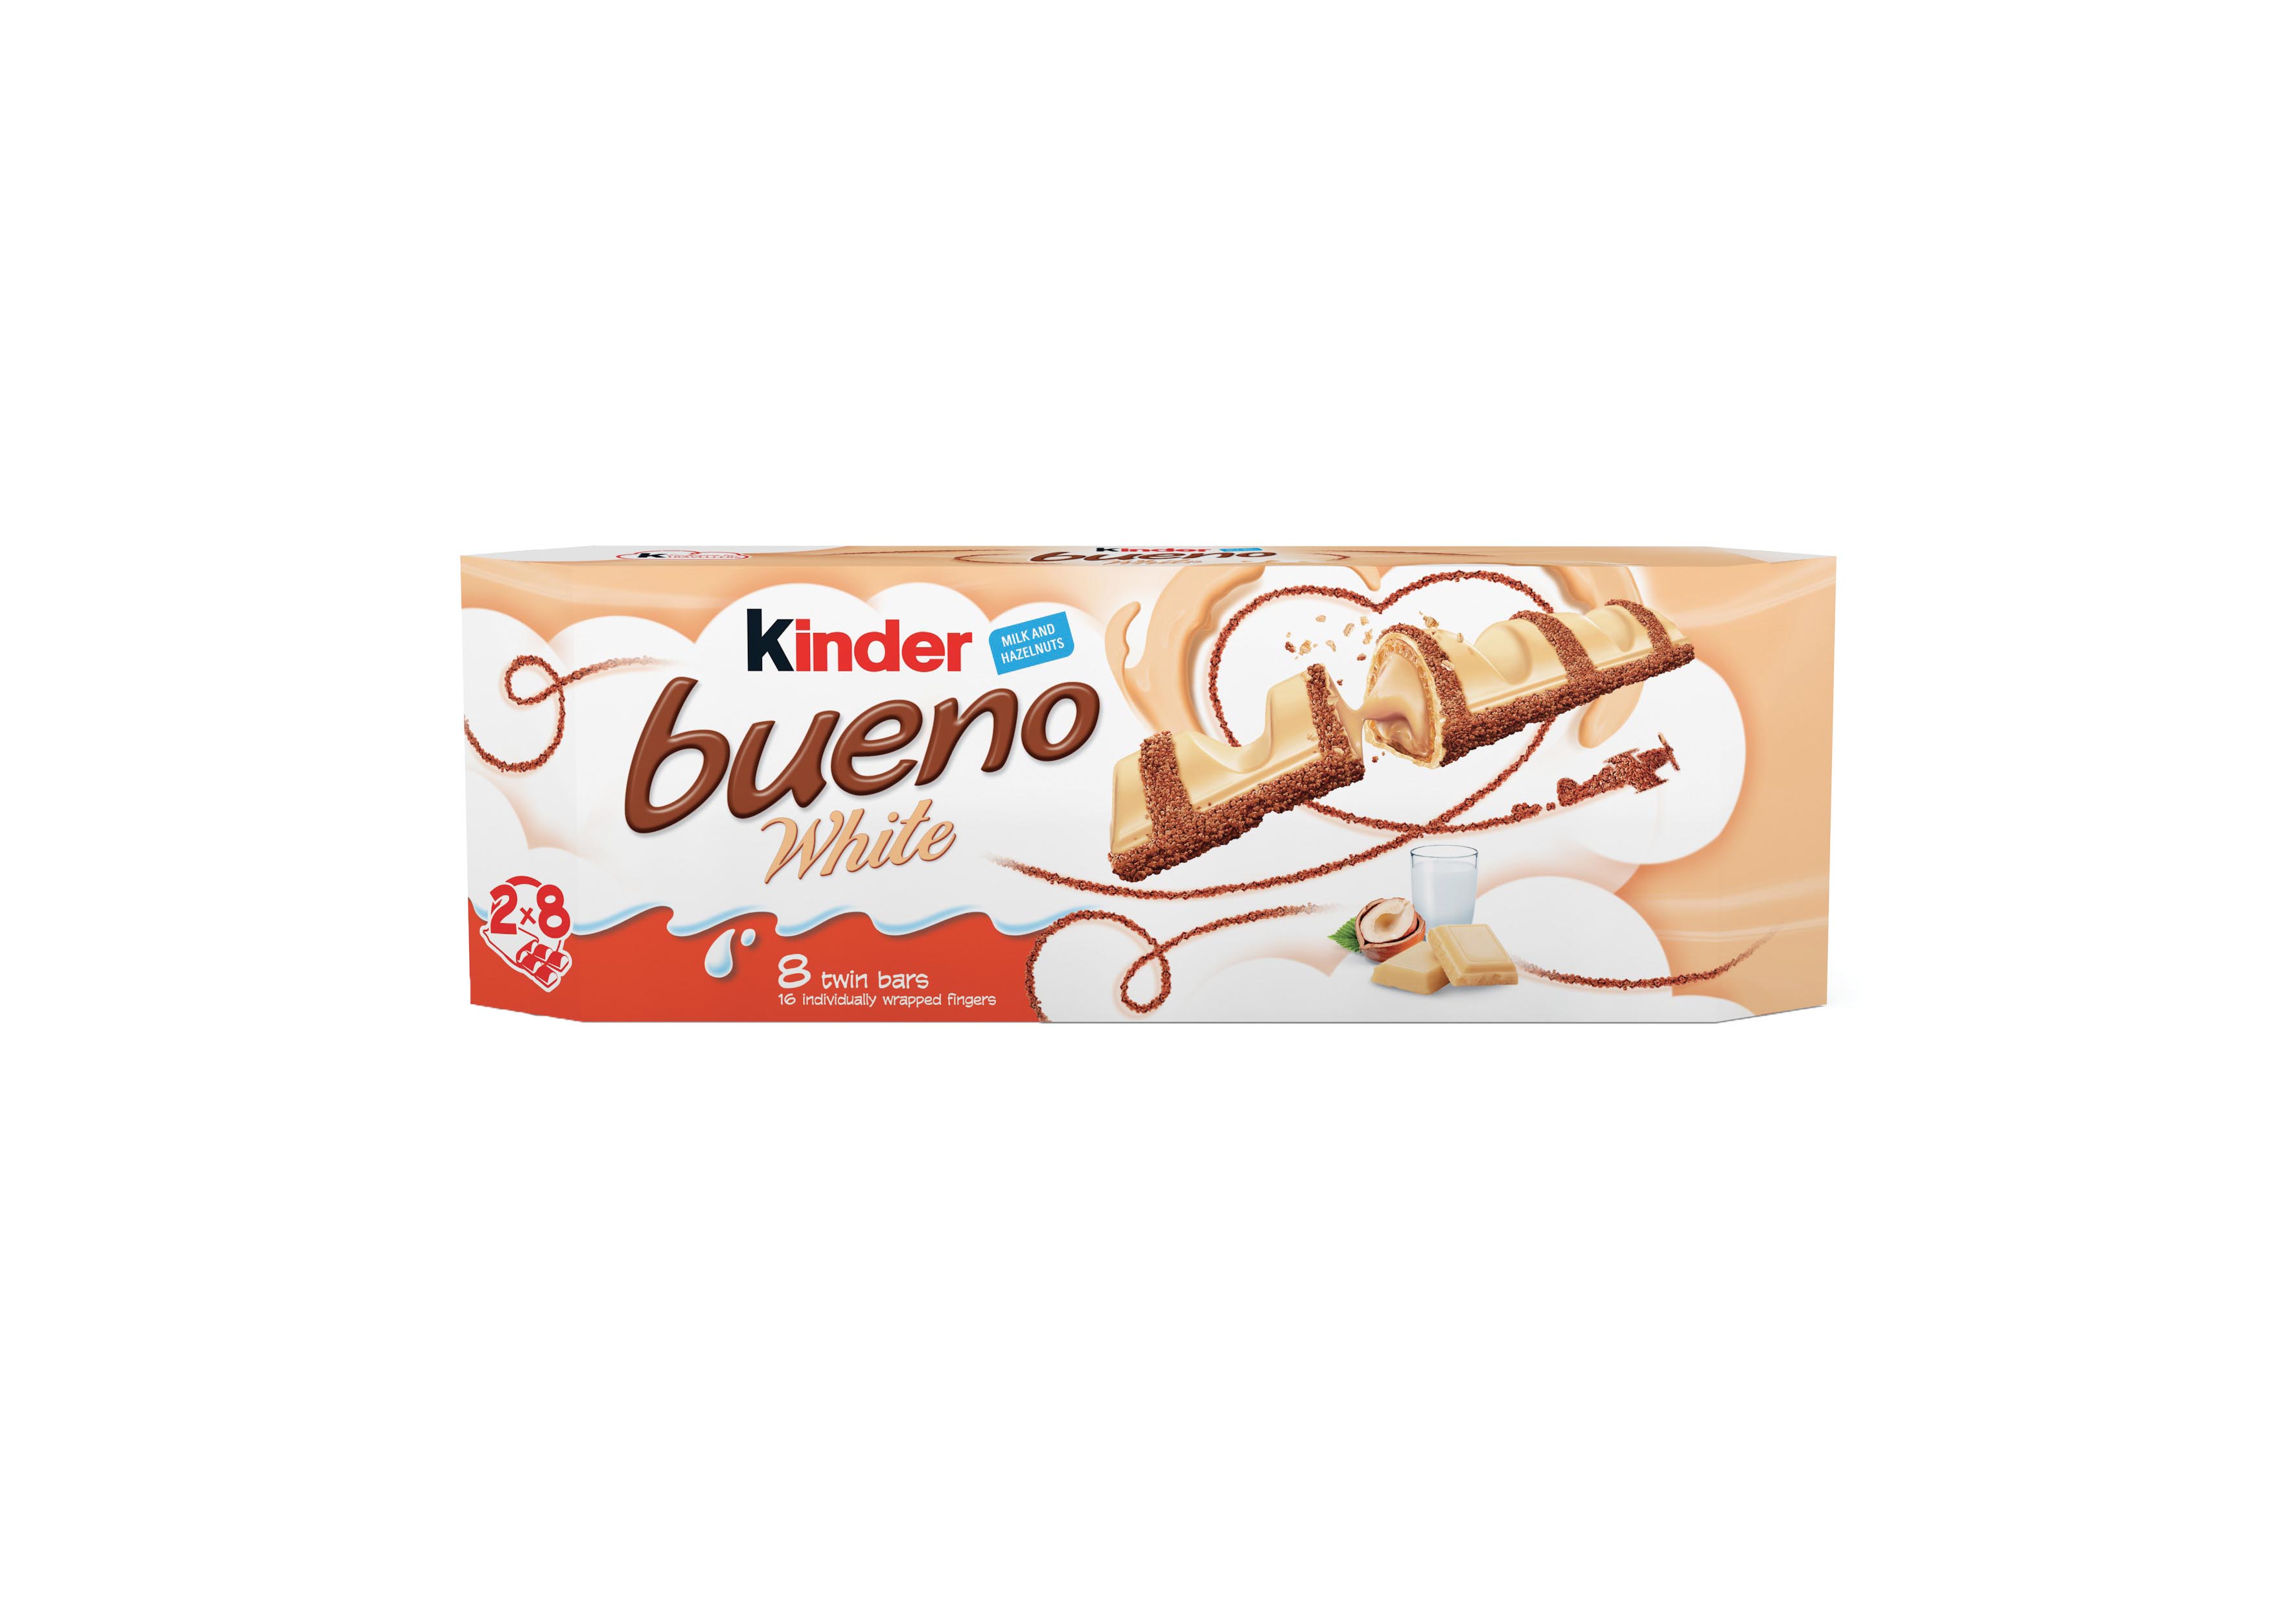 Kinder Bueno White, Travel Edition 312g null - onesize - 1